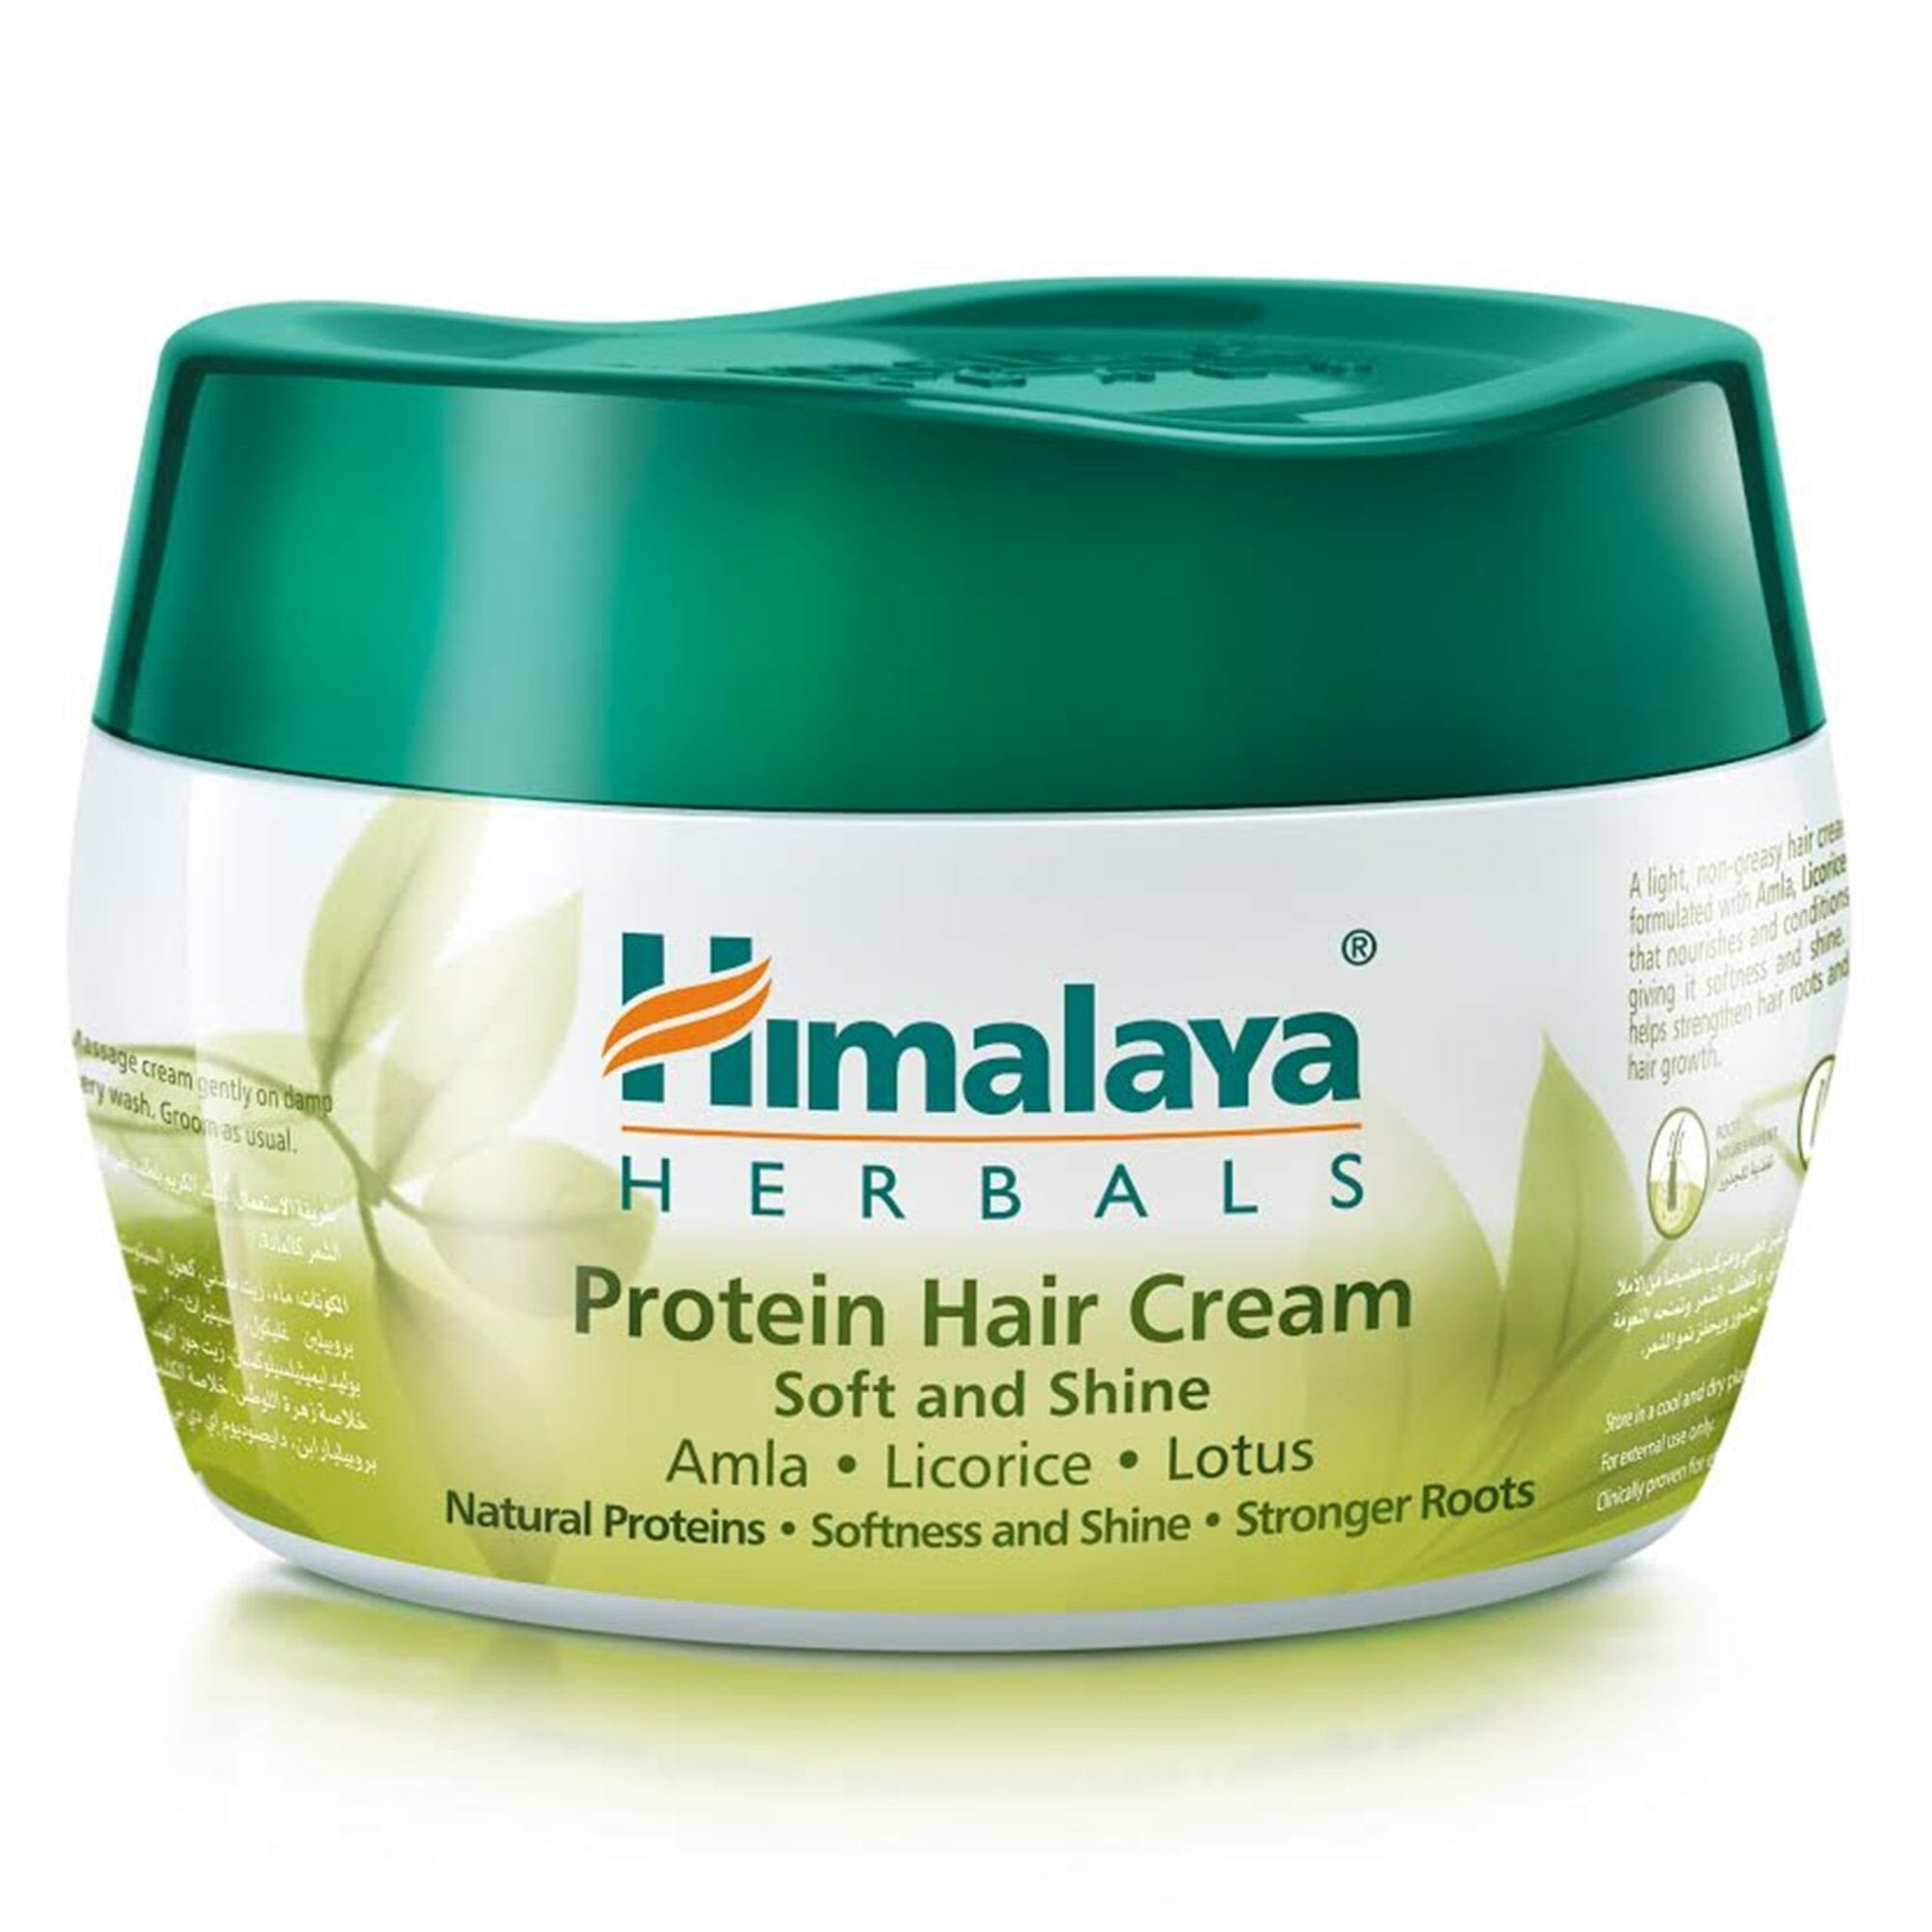 Himalaya Herbals Protein Hair Cream Soft and Shine Best Keratin Hair Mask In Pakistan